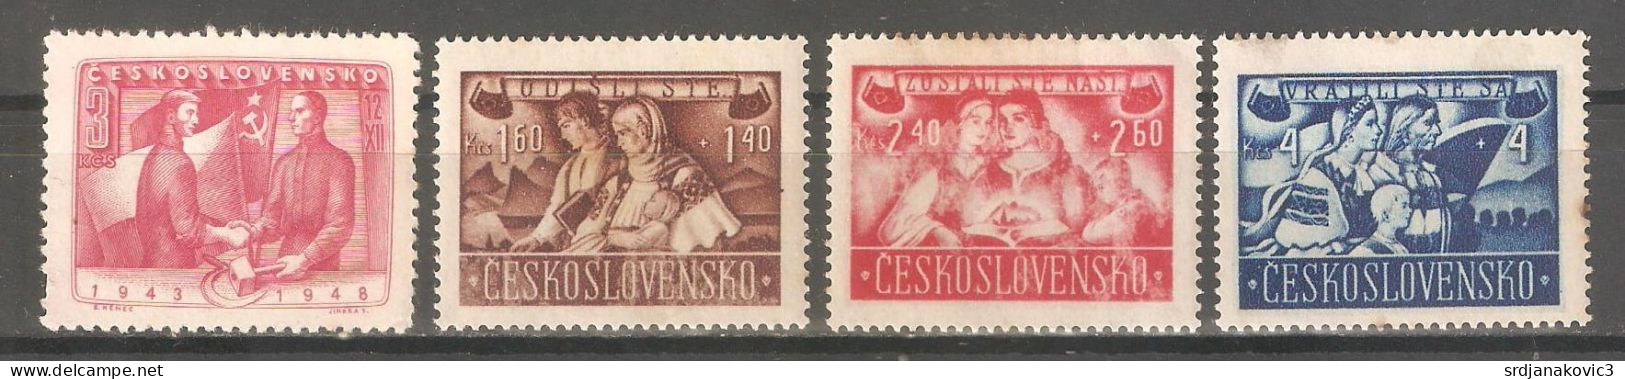 Czechoslovakia - Unused Stamps